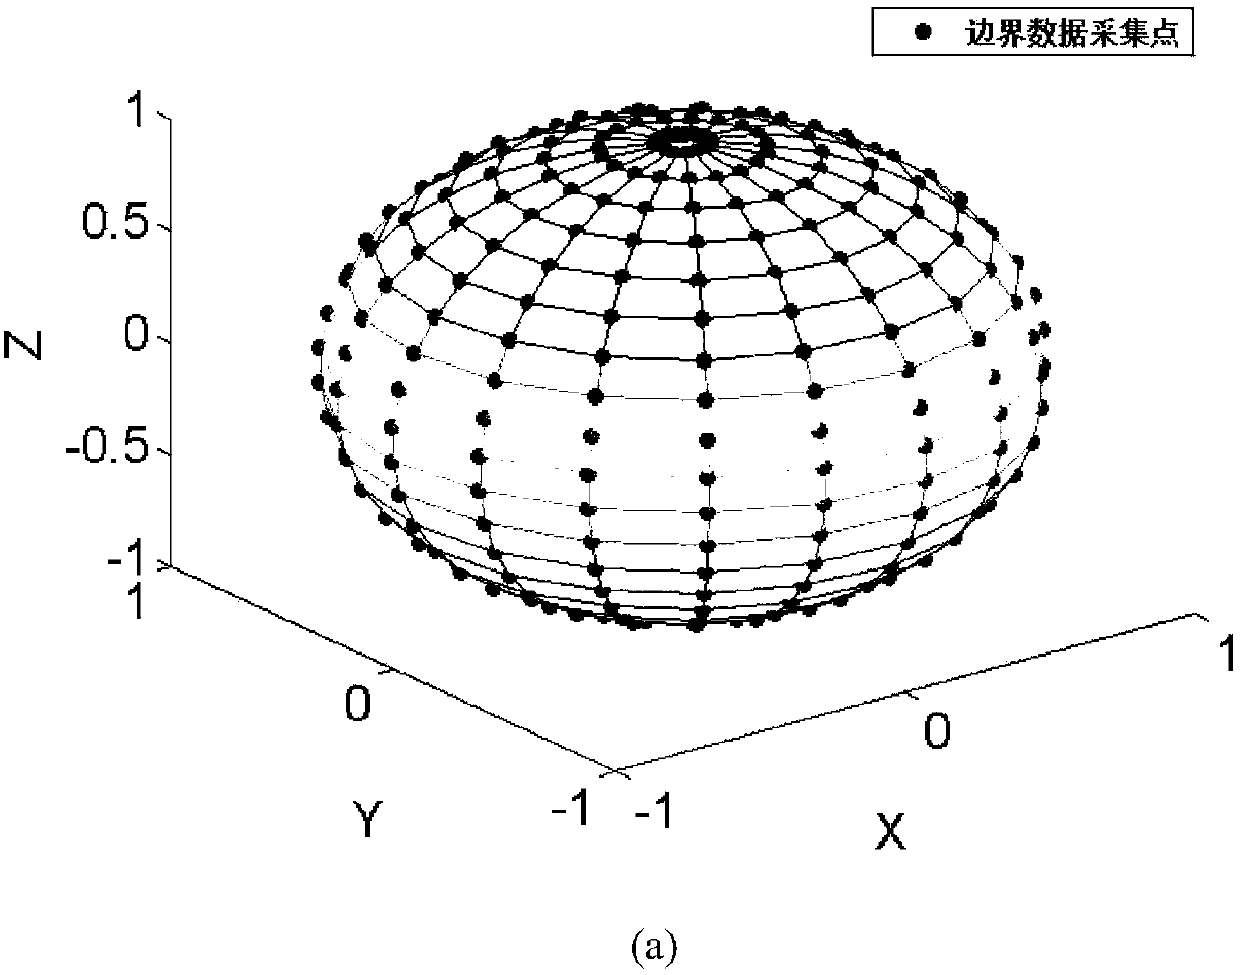 A Dynamic Data Reconstruction Method Based on Singular Boundary Method